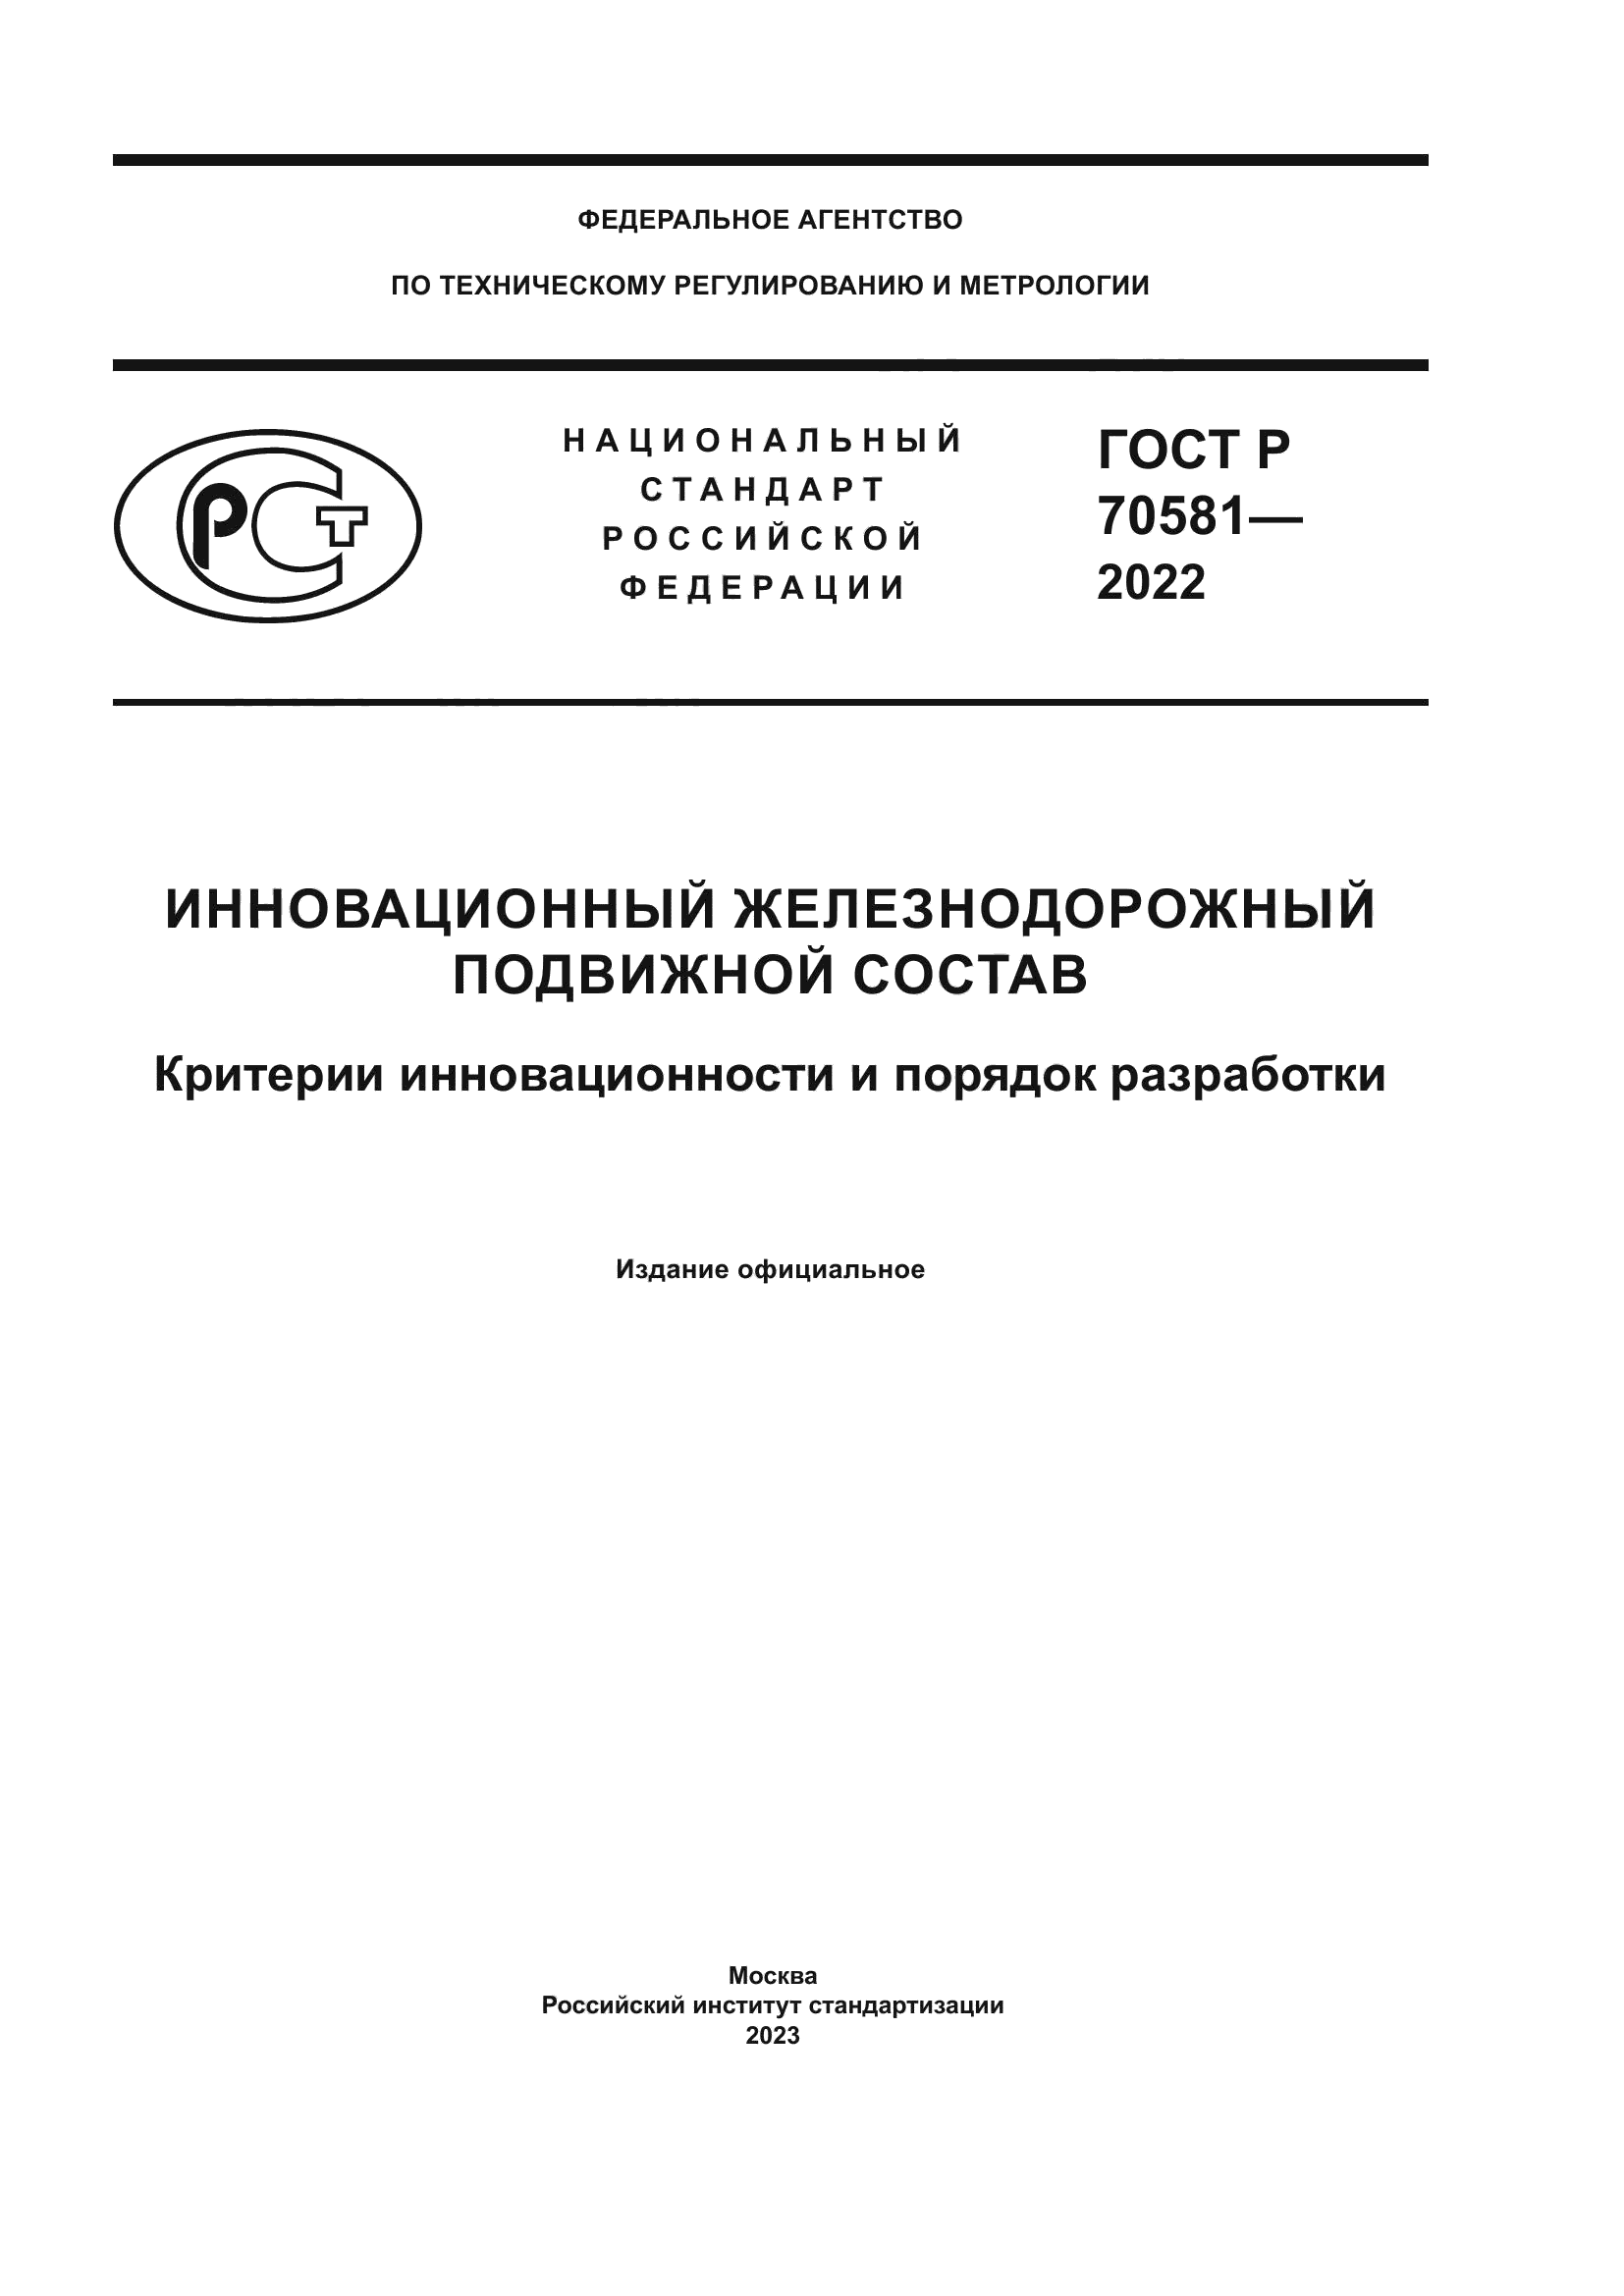 ГОСТ Р 70581-2022